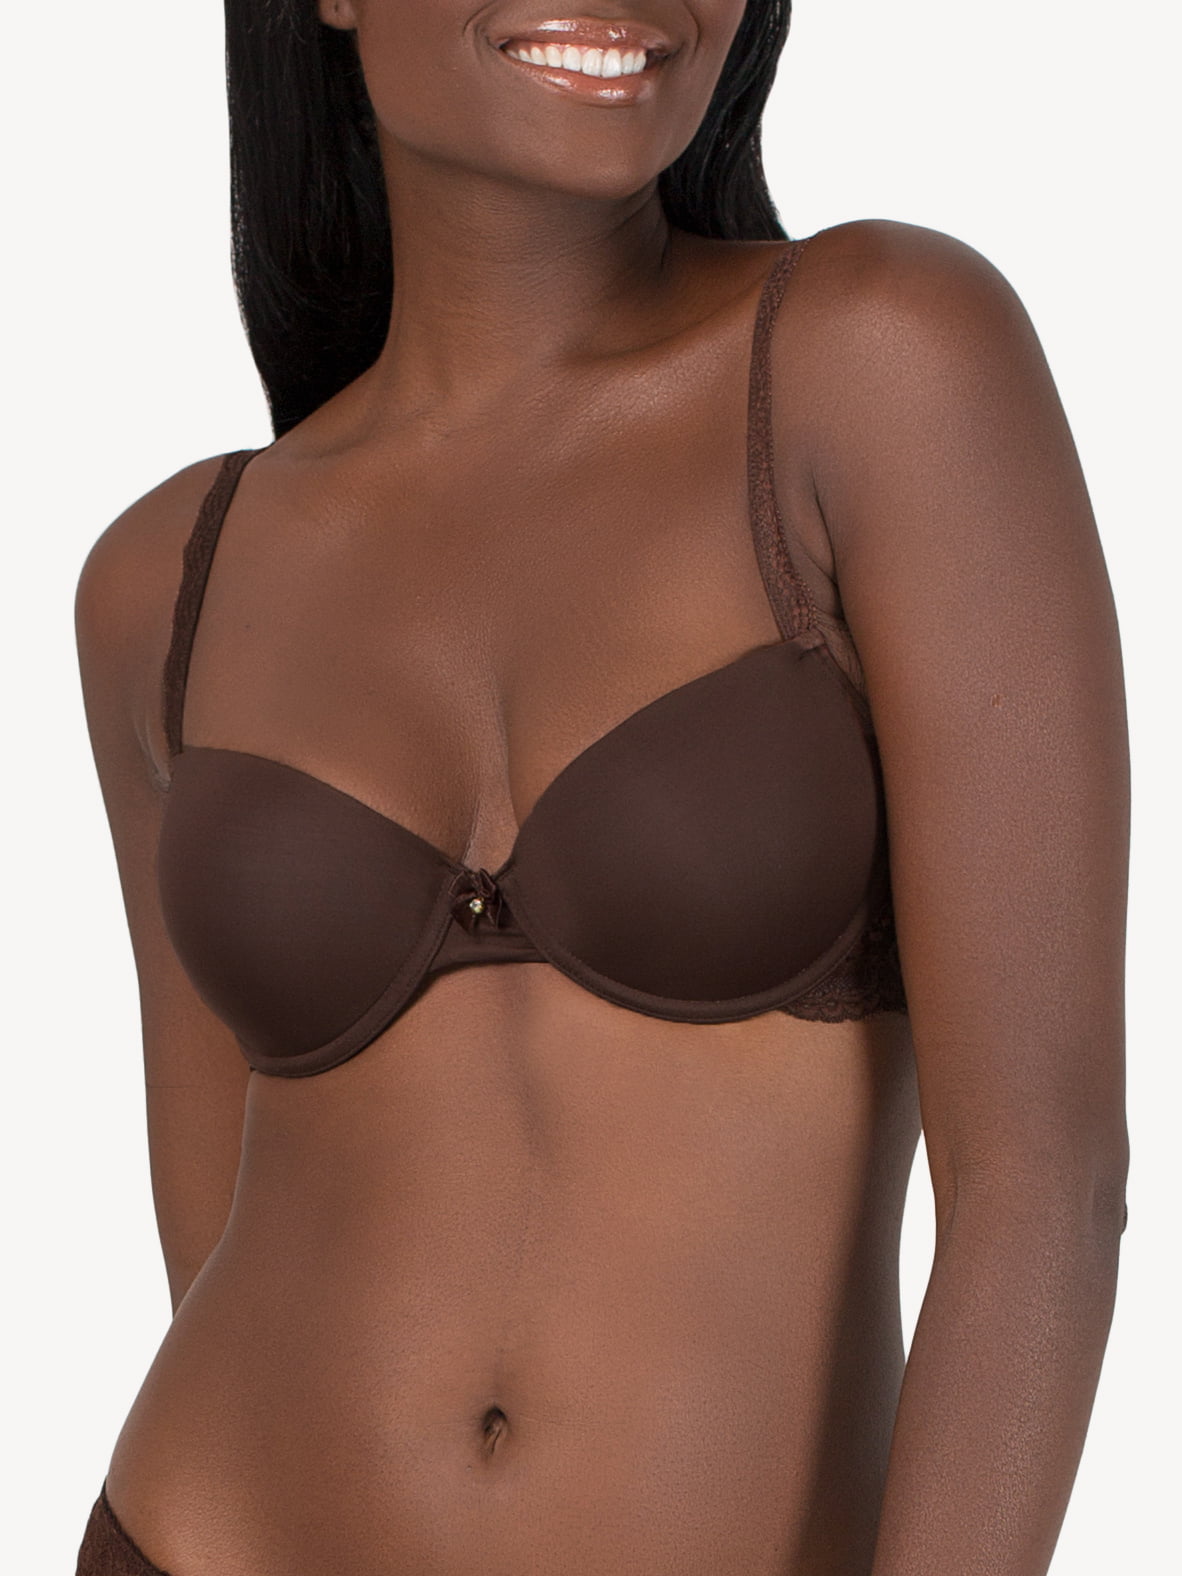 Mor Krav hans Women's Skin Tone Nude Push-Up Bra, Style SA895 - Walmart.com